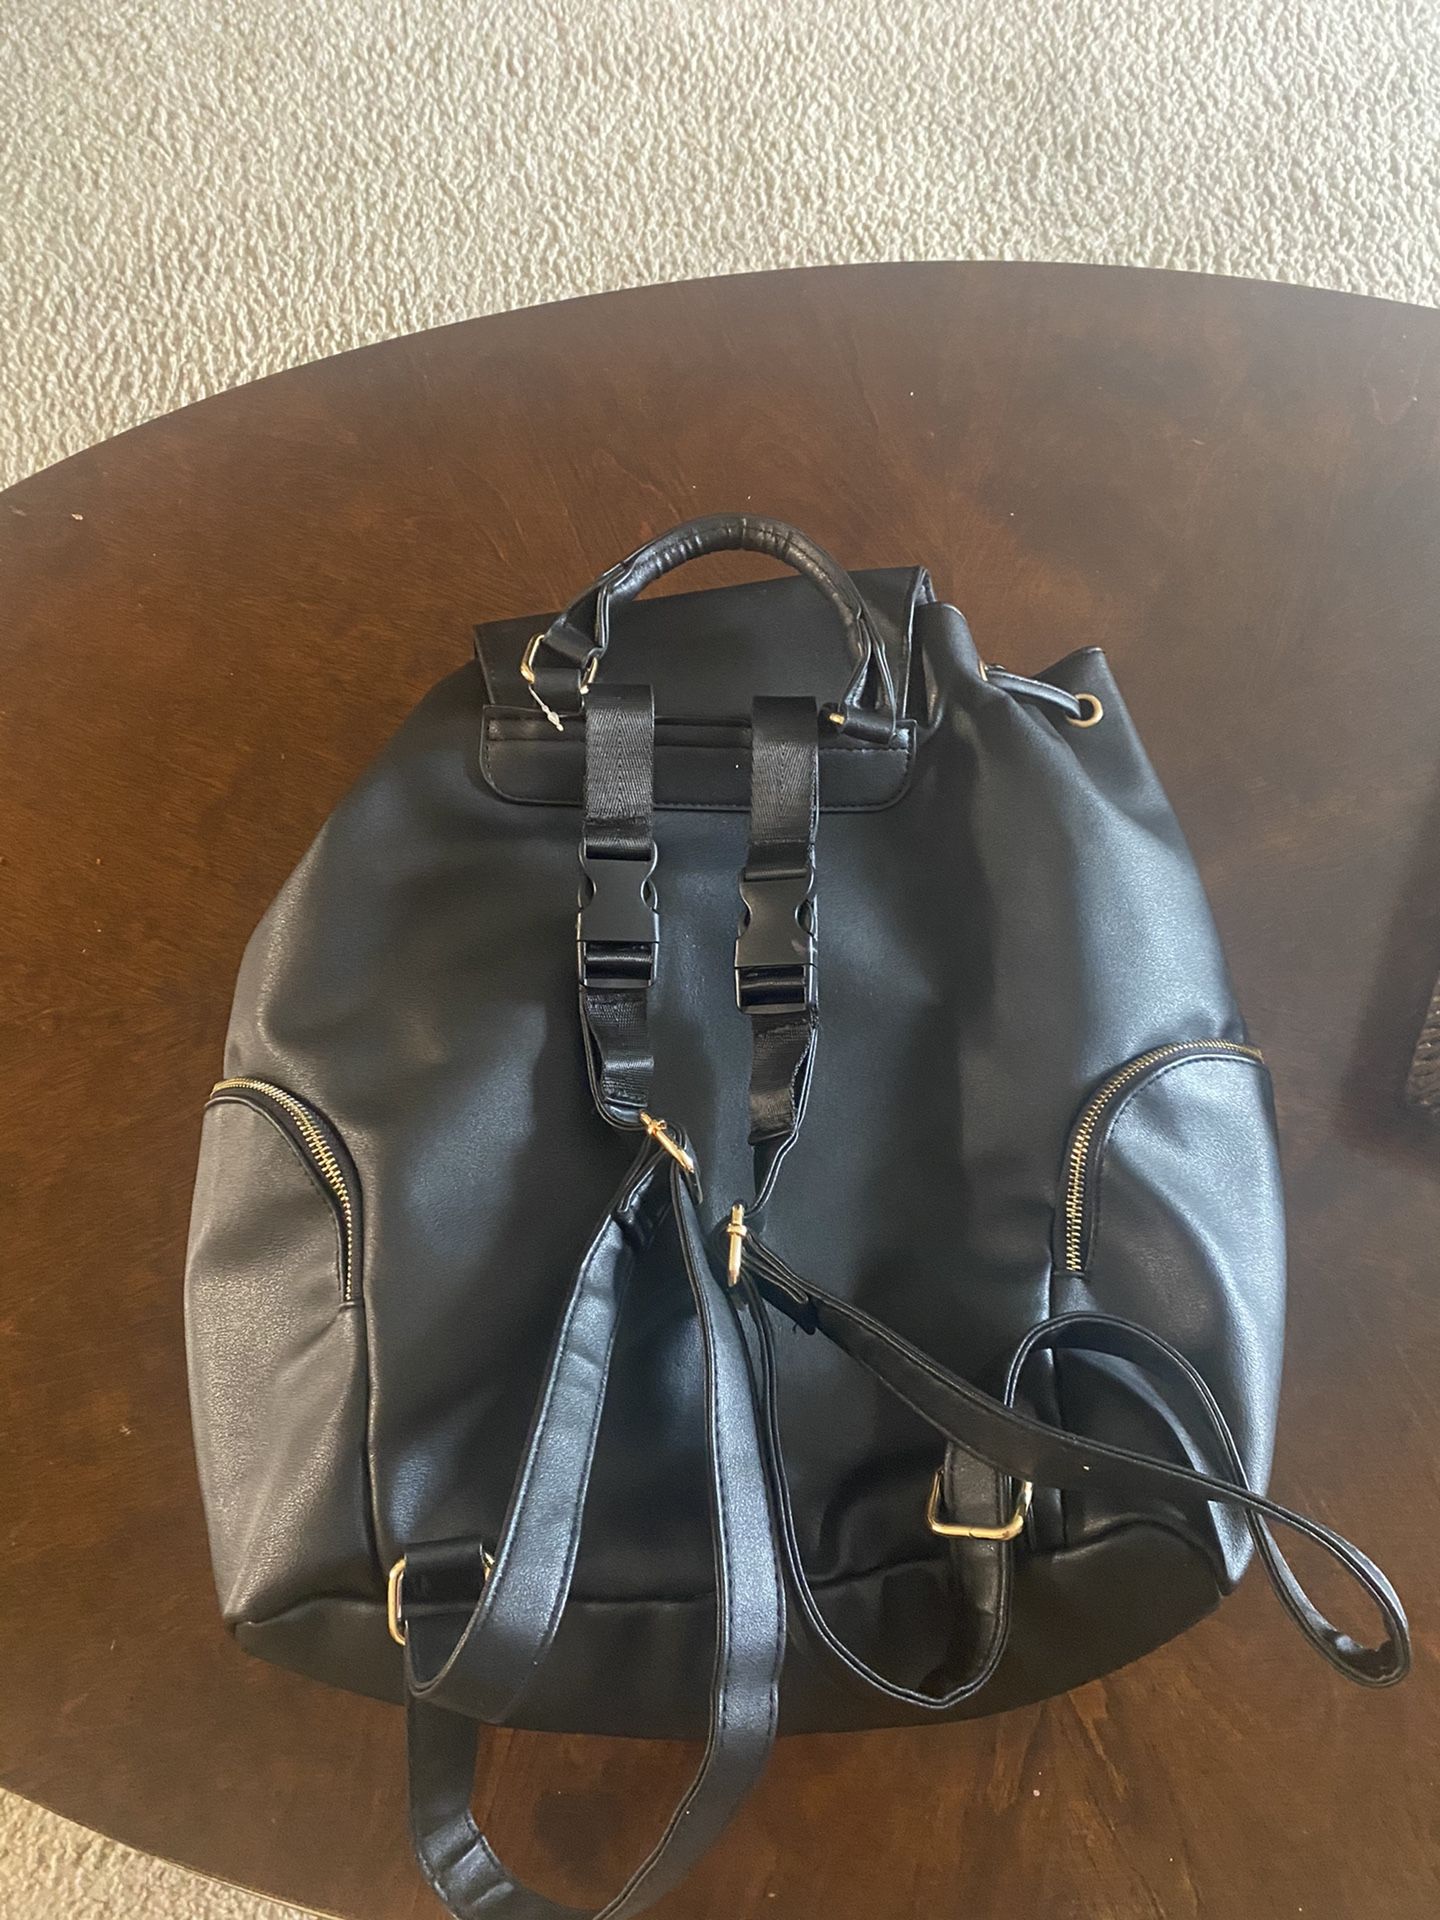 Bebe black backpack